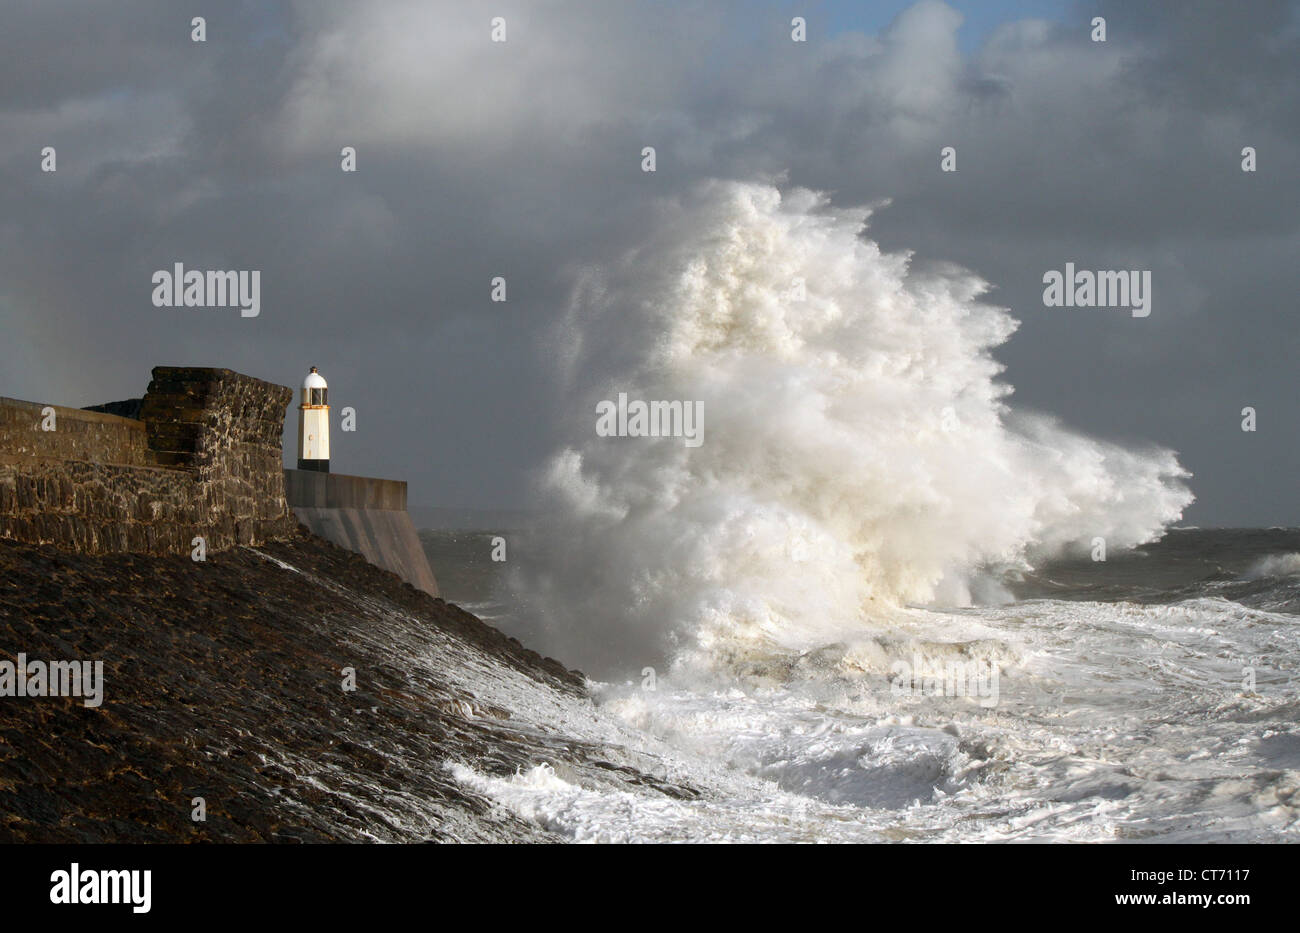 Uragano Katia hits Wales UK costa onde massiccia Foto Stock